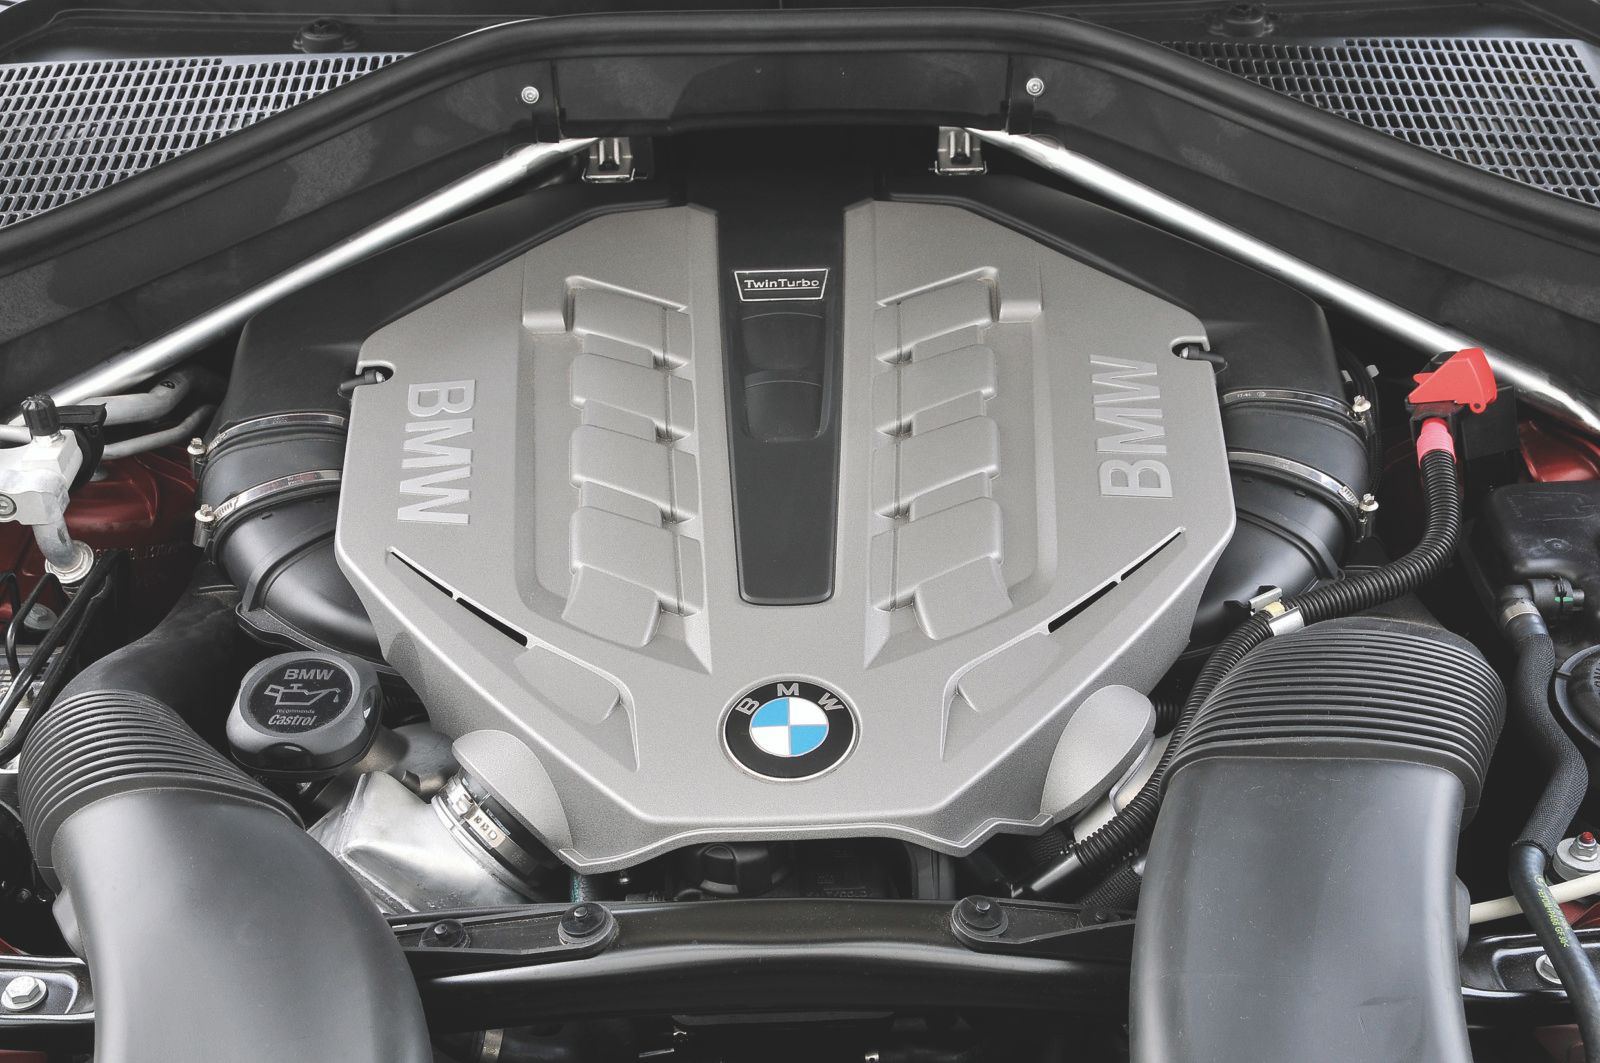 BMW engine bay at its best